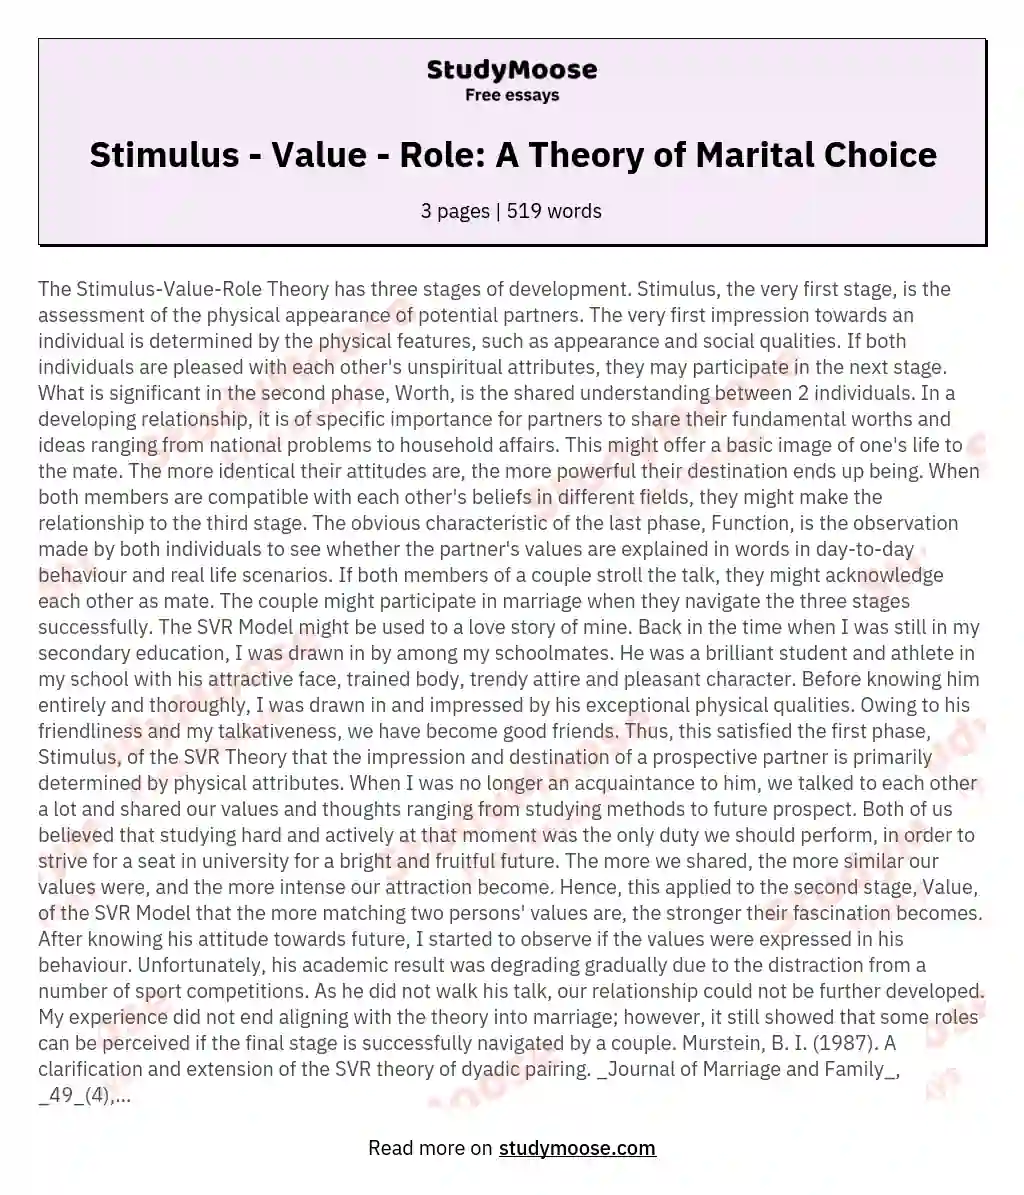 Stimulus - Value - Role: A Theory of Marital Choice essay